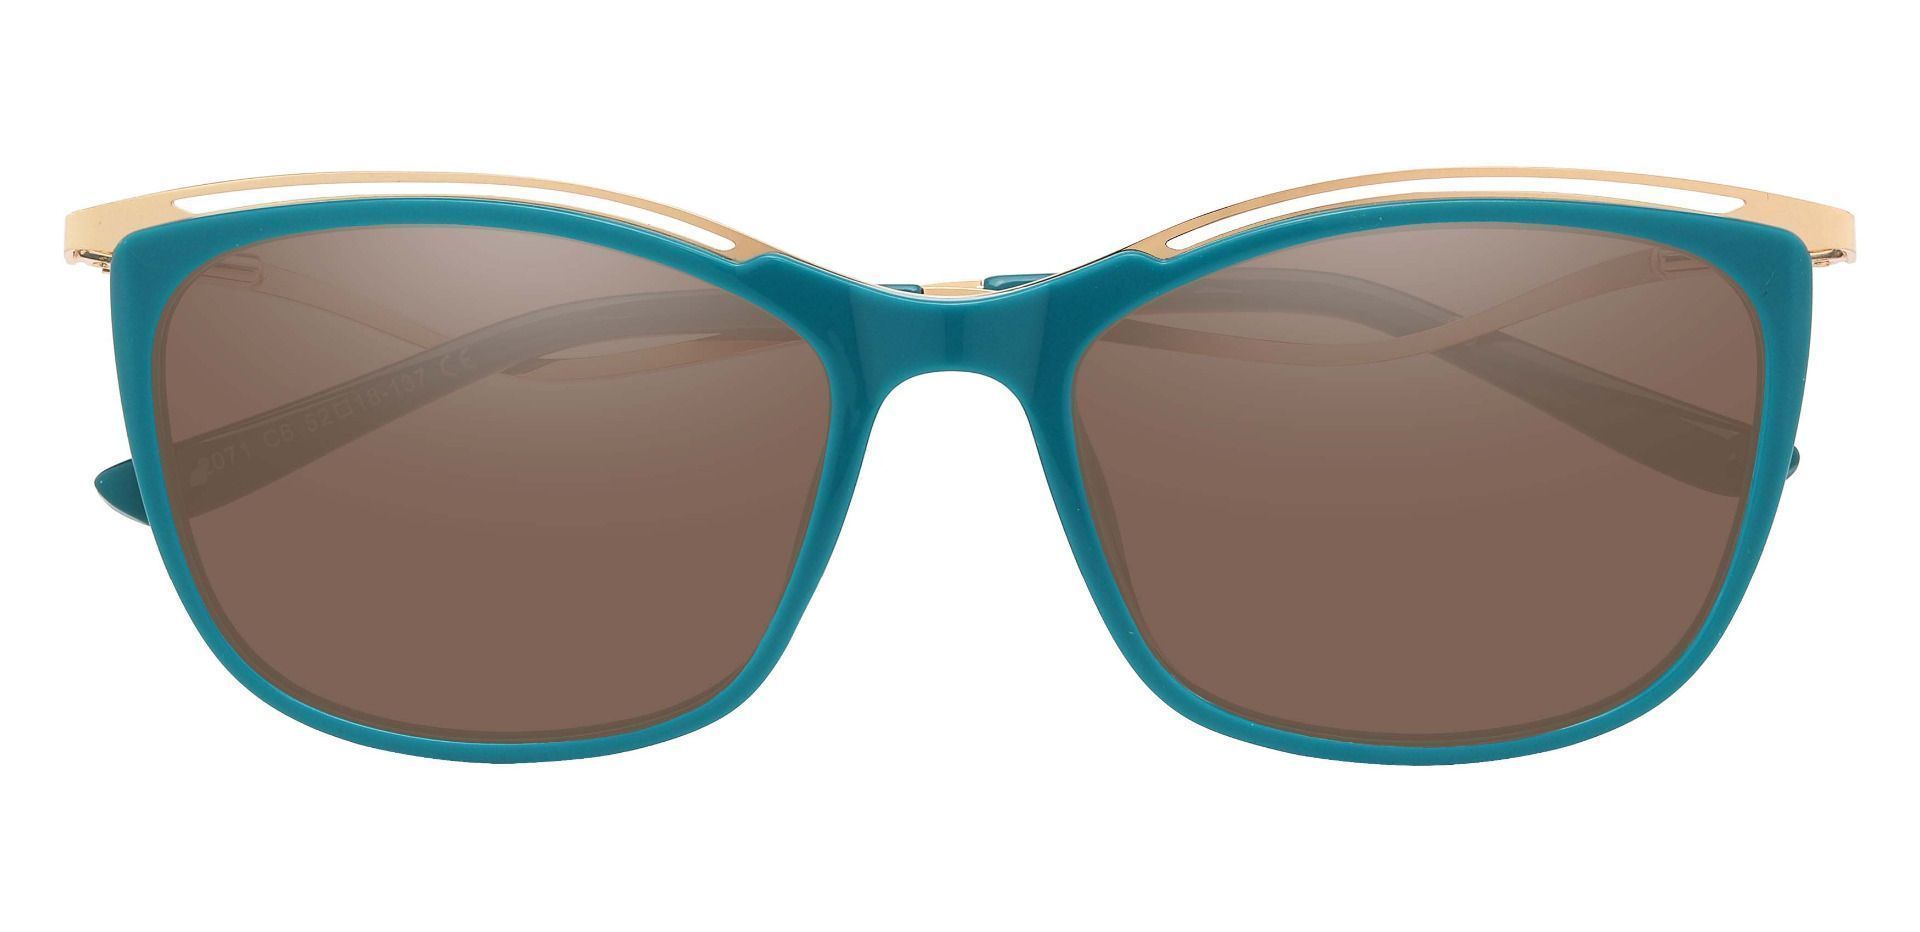 Enola Cat Eye Reading Sunglasses - Green Frame With Brown Lenses